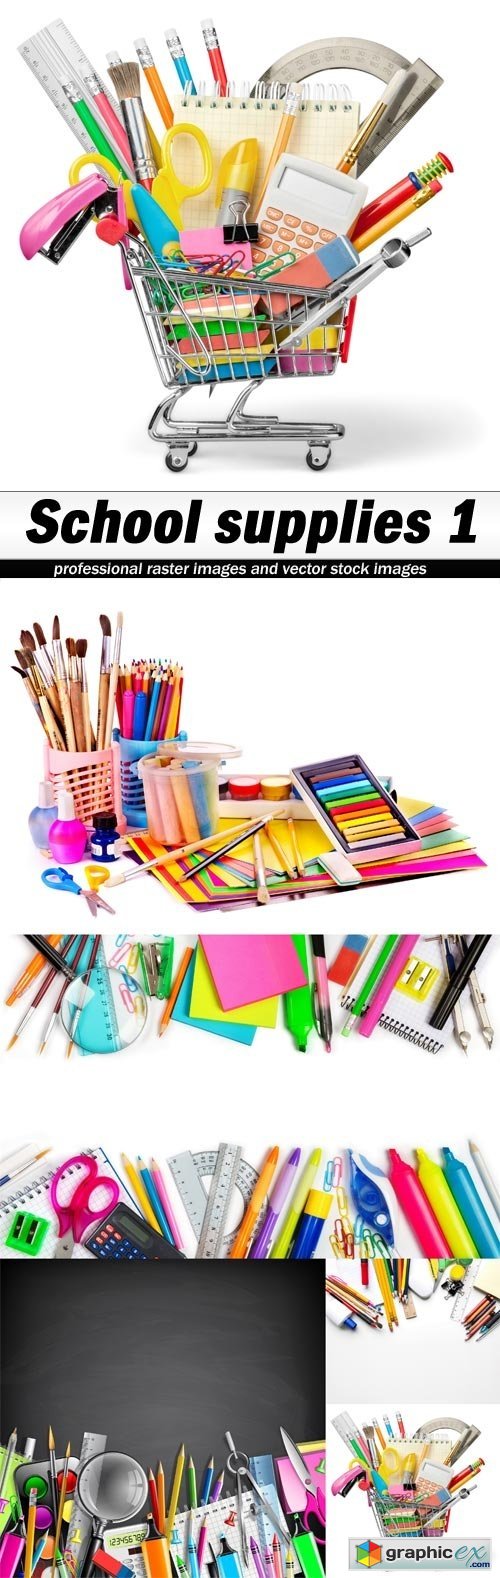 School supplies 1 - 5 UHQ JPEG